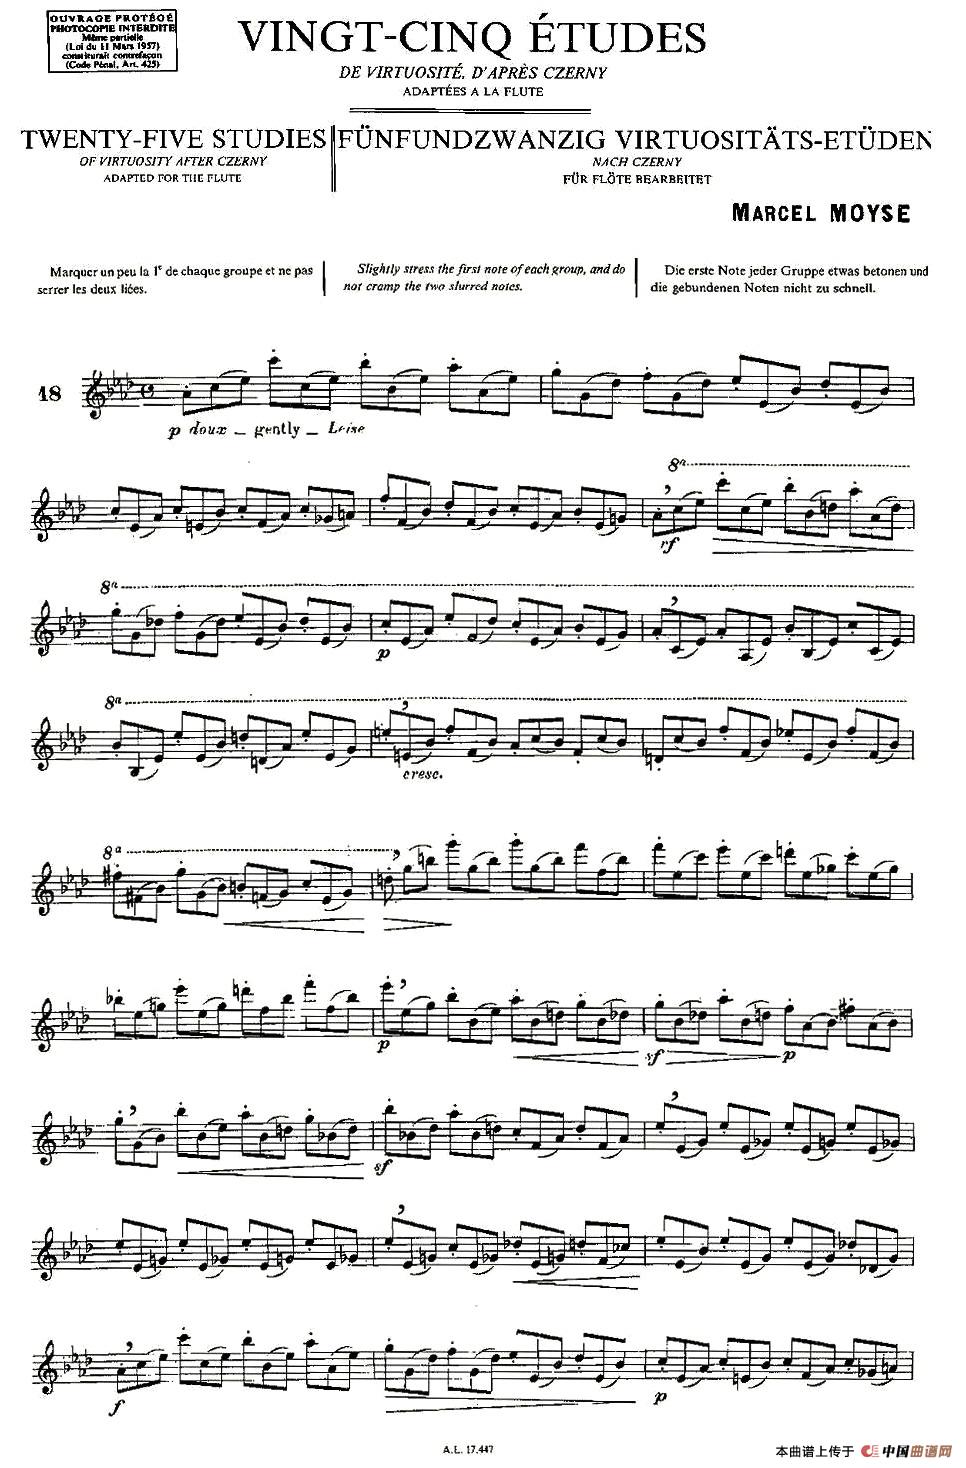 Moyse - 25 Studies after Czerny flute 之18（25首改编自车